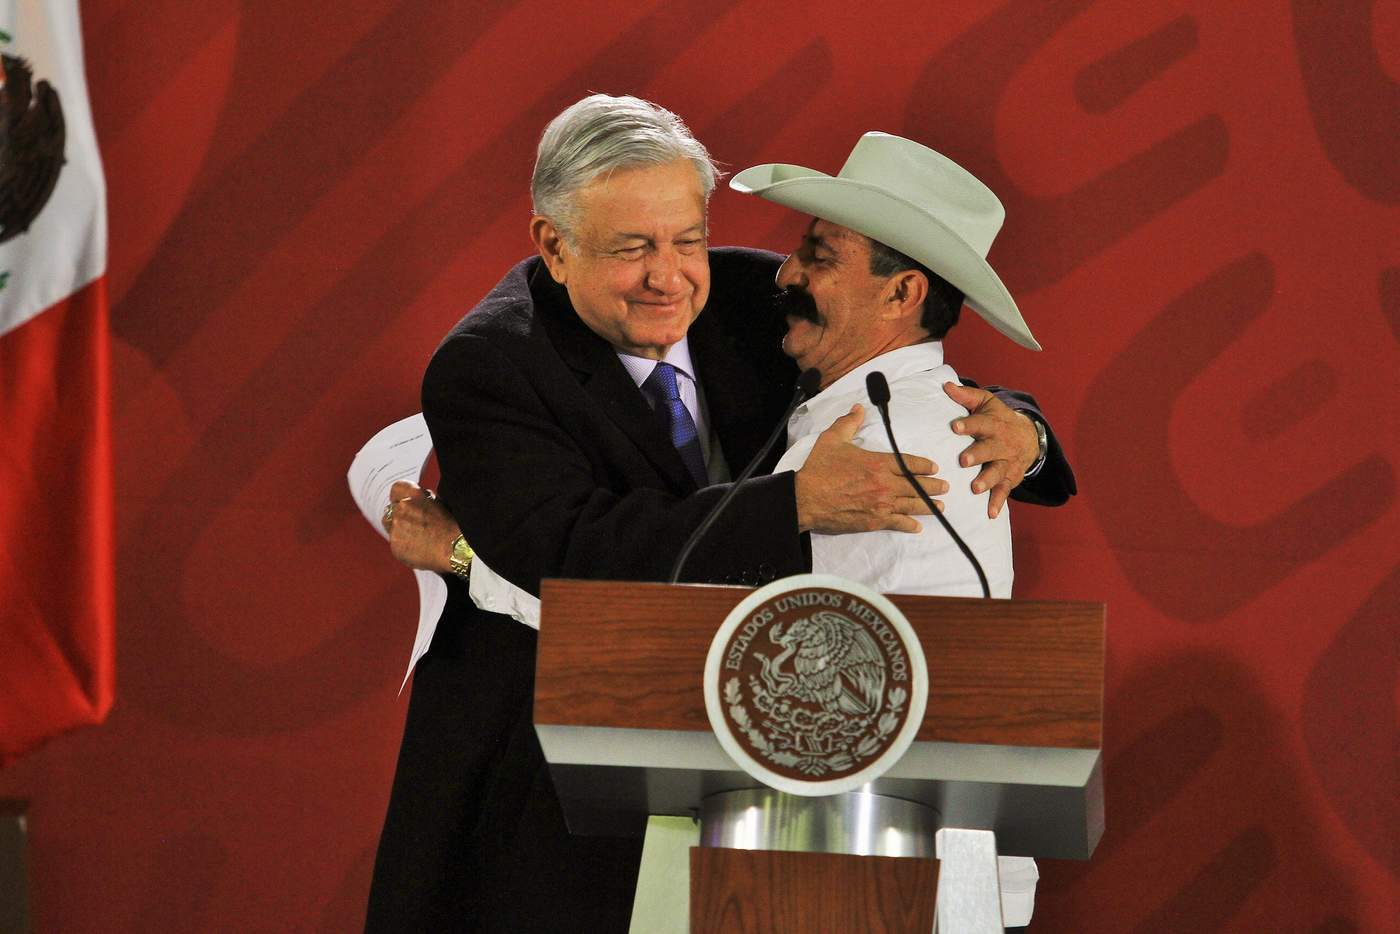 Gobierno de México dedicará este año a Emiliano Zapata